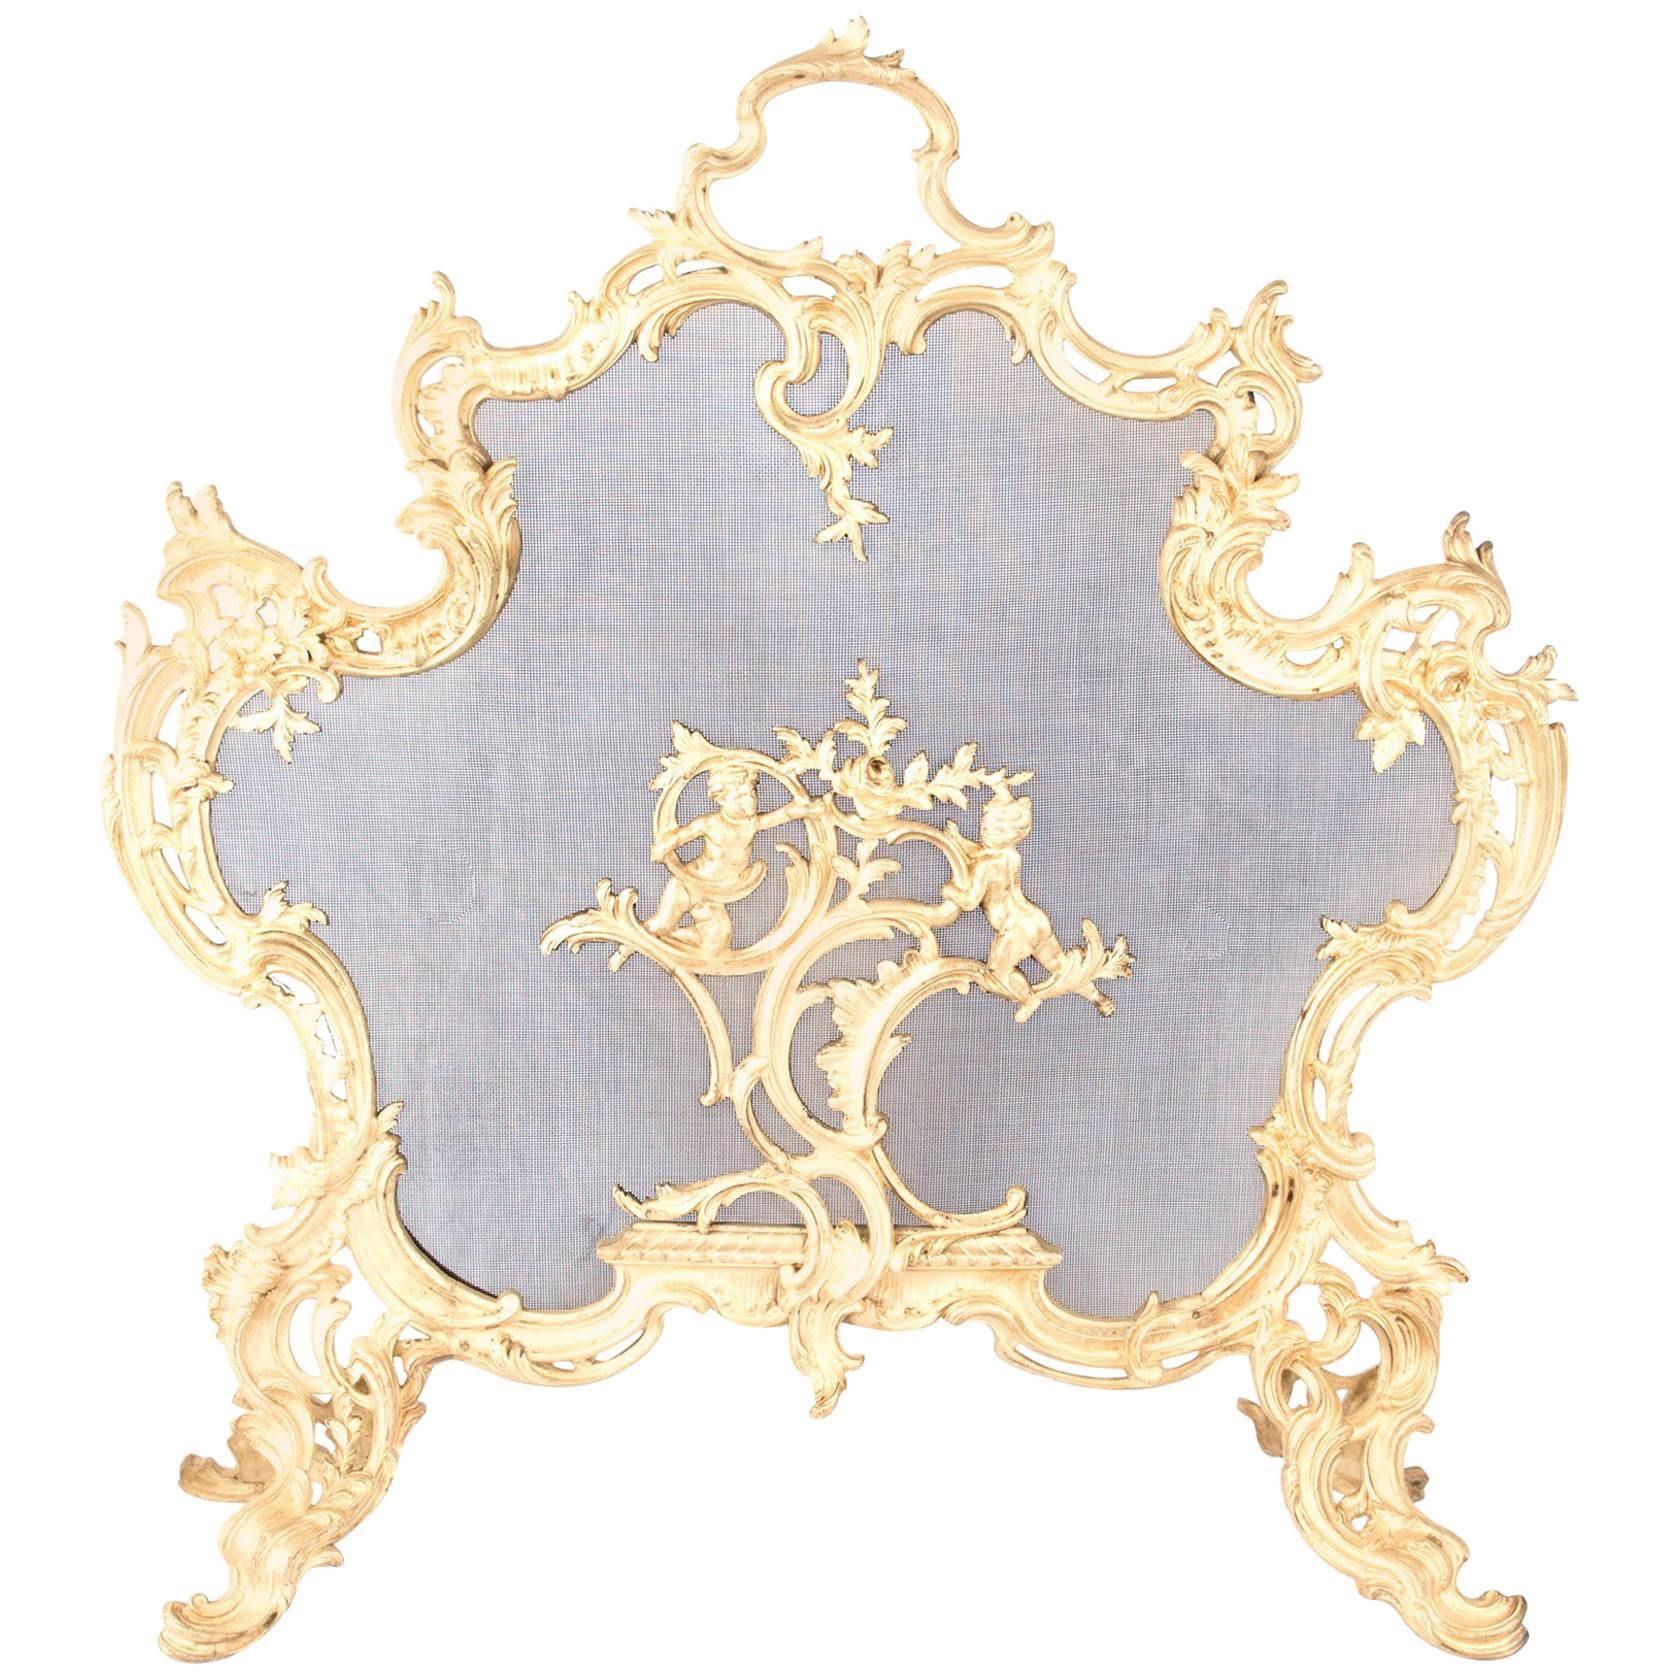 19th Century Gilt-Brass Rococo-Style Fireplace Screen